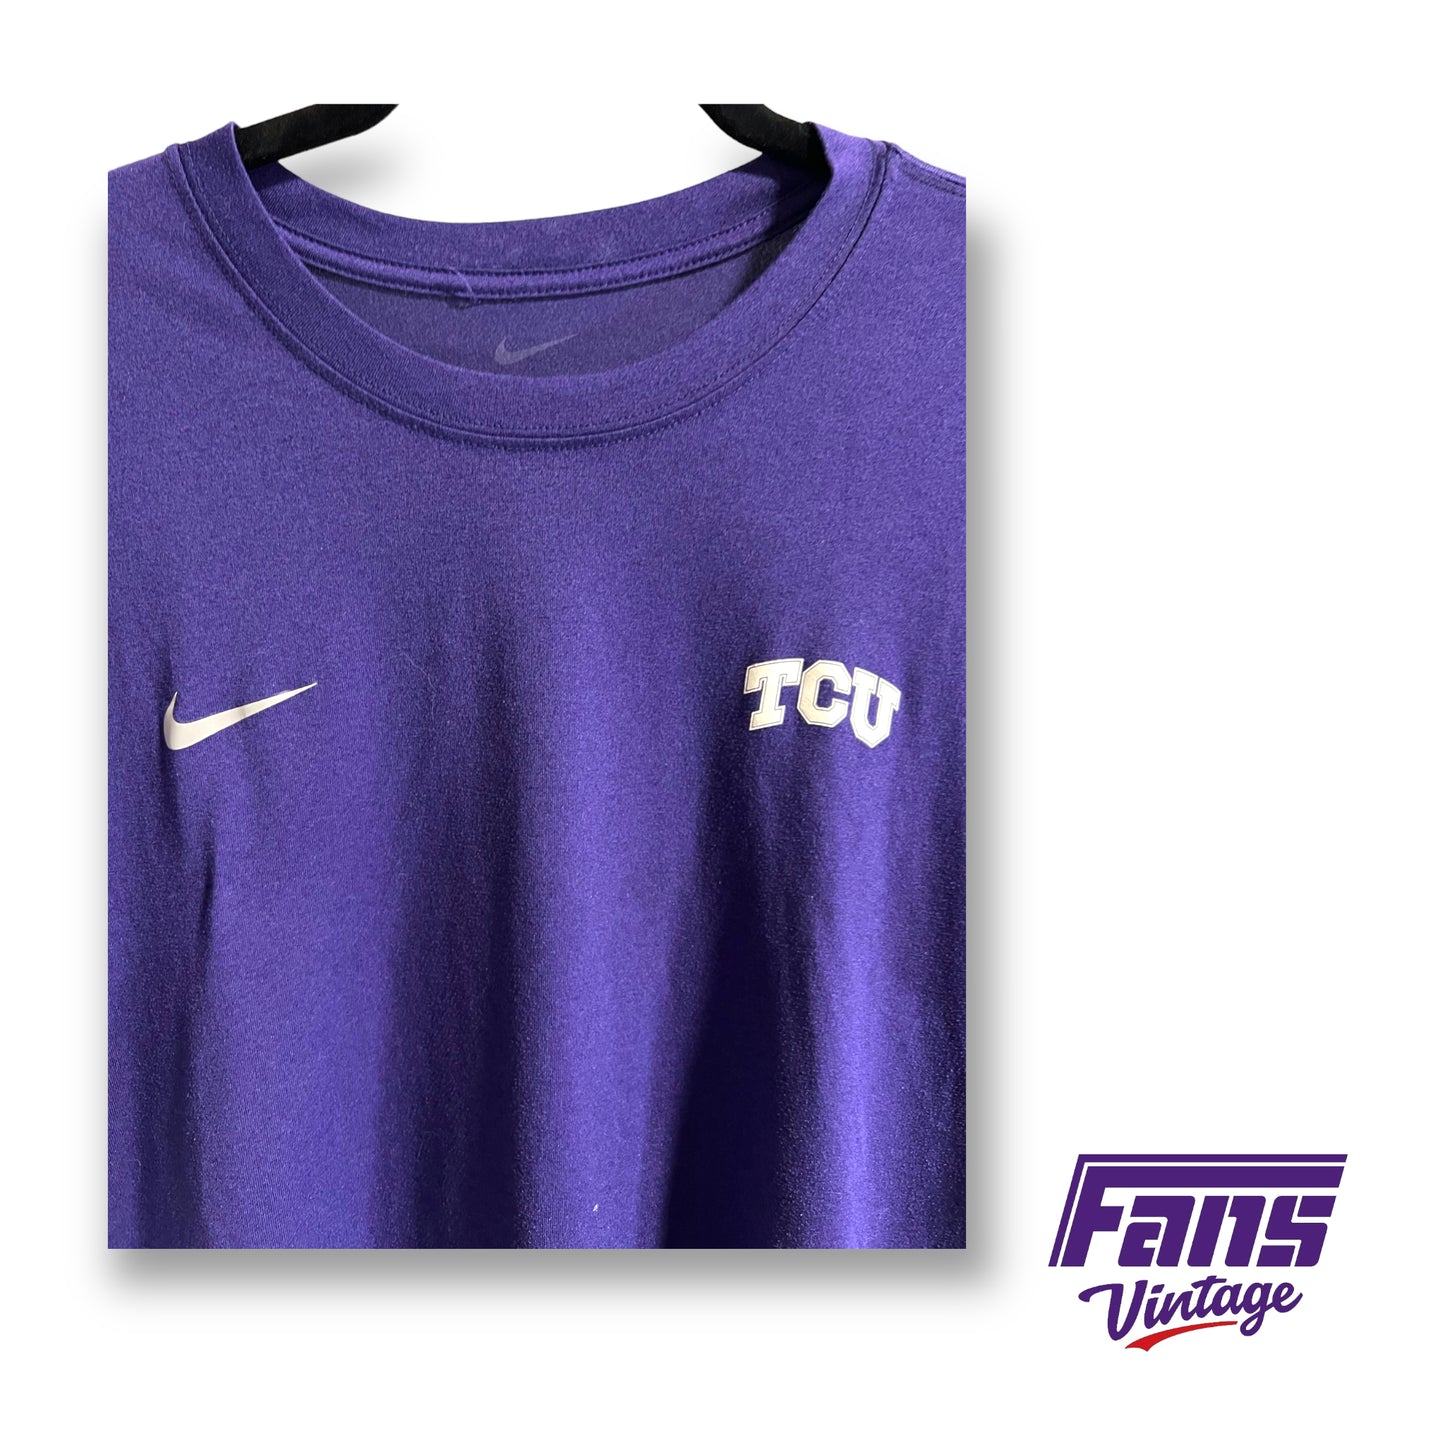 Nike TCU team issued workout t-shirt